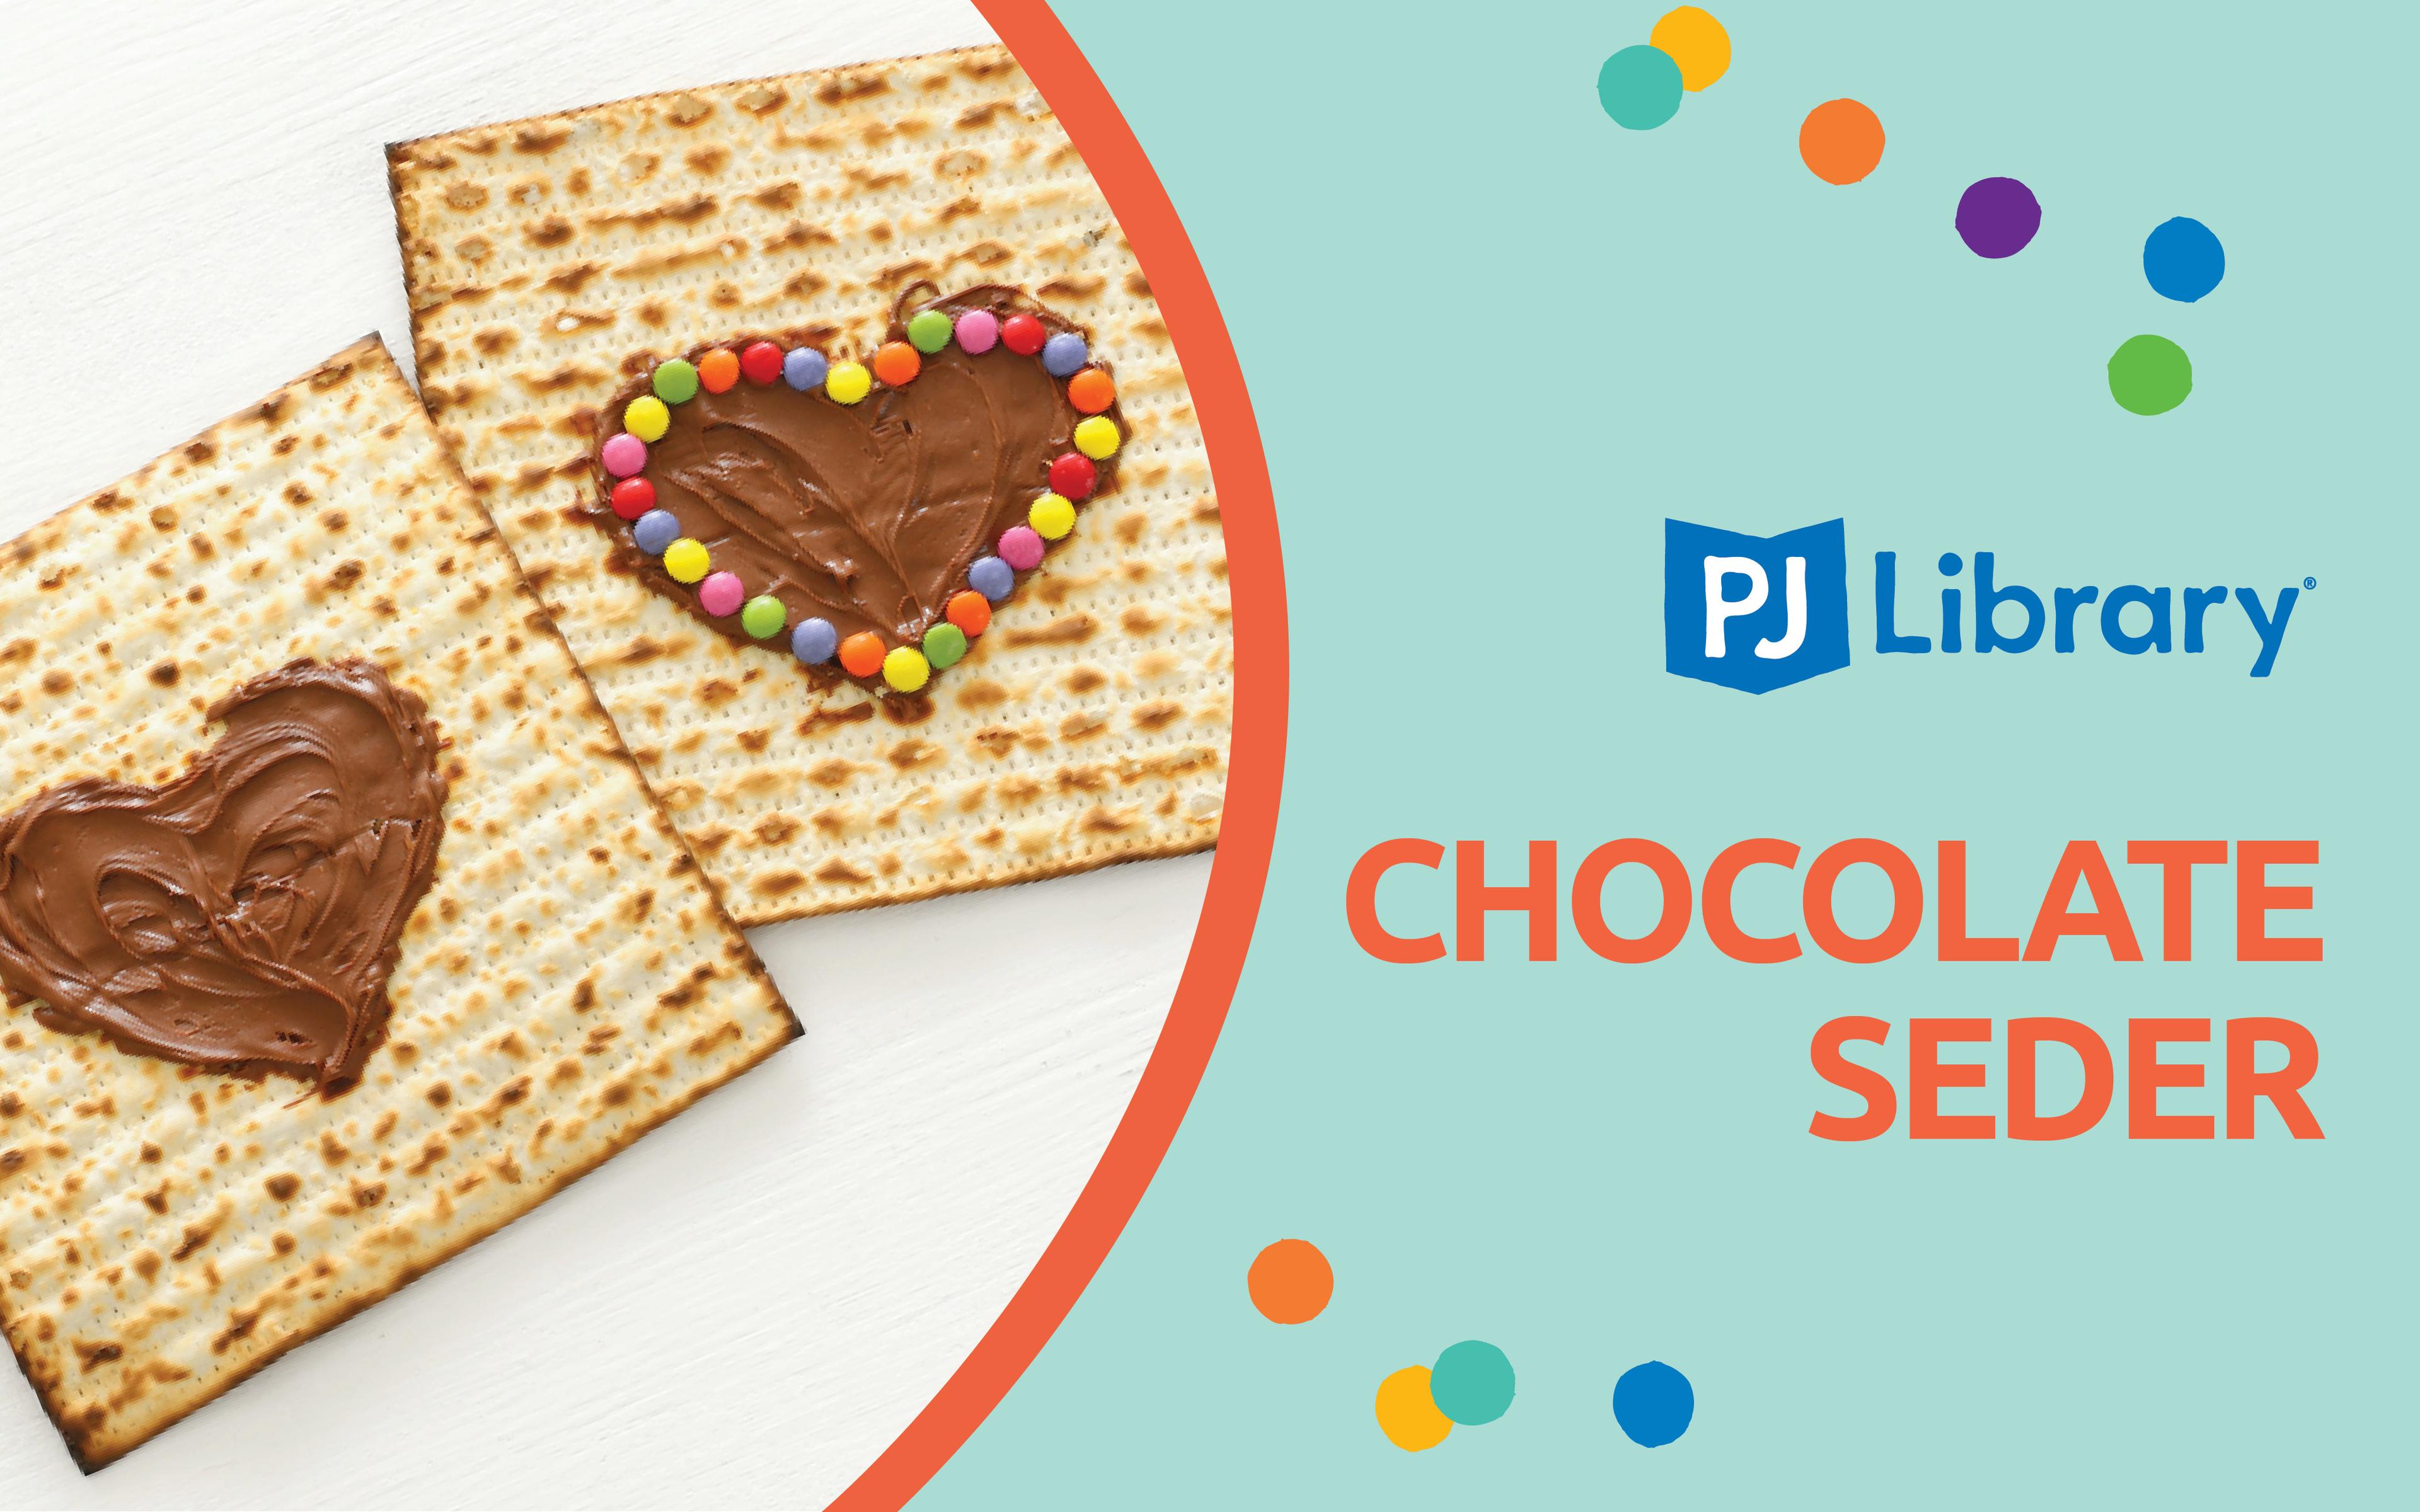 PJ Library's Chocolate Seder